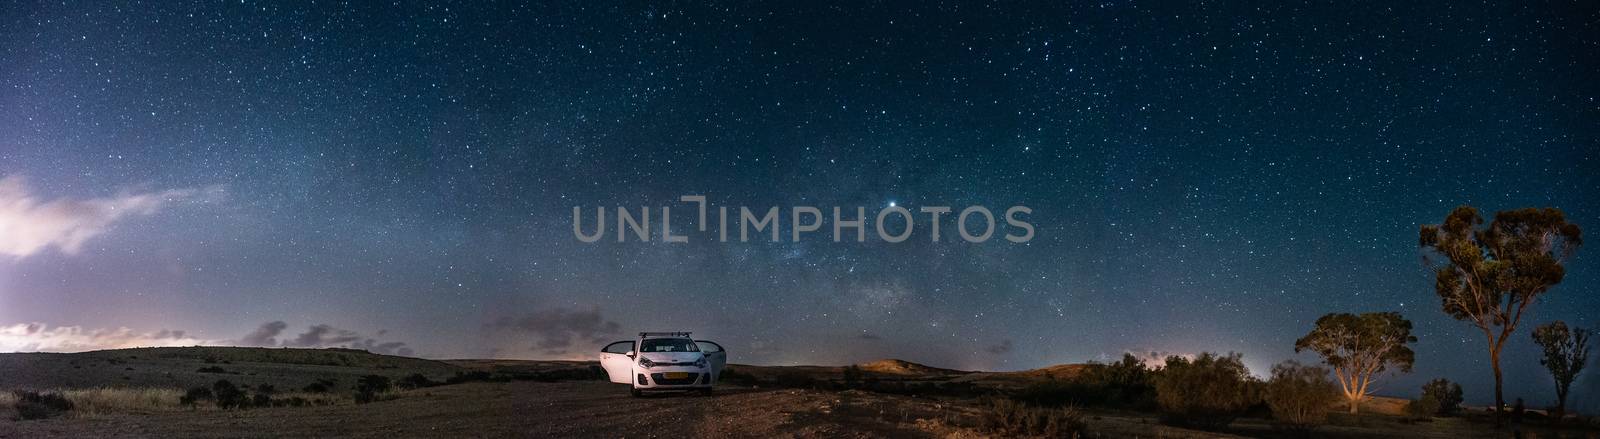 panoramic stars landscape in milky way night